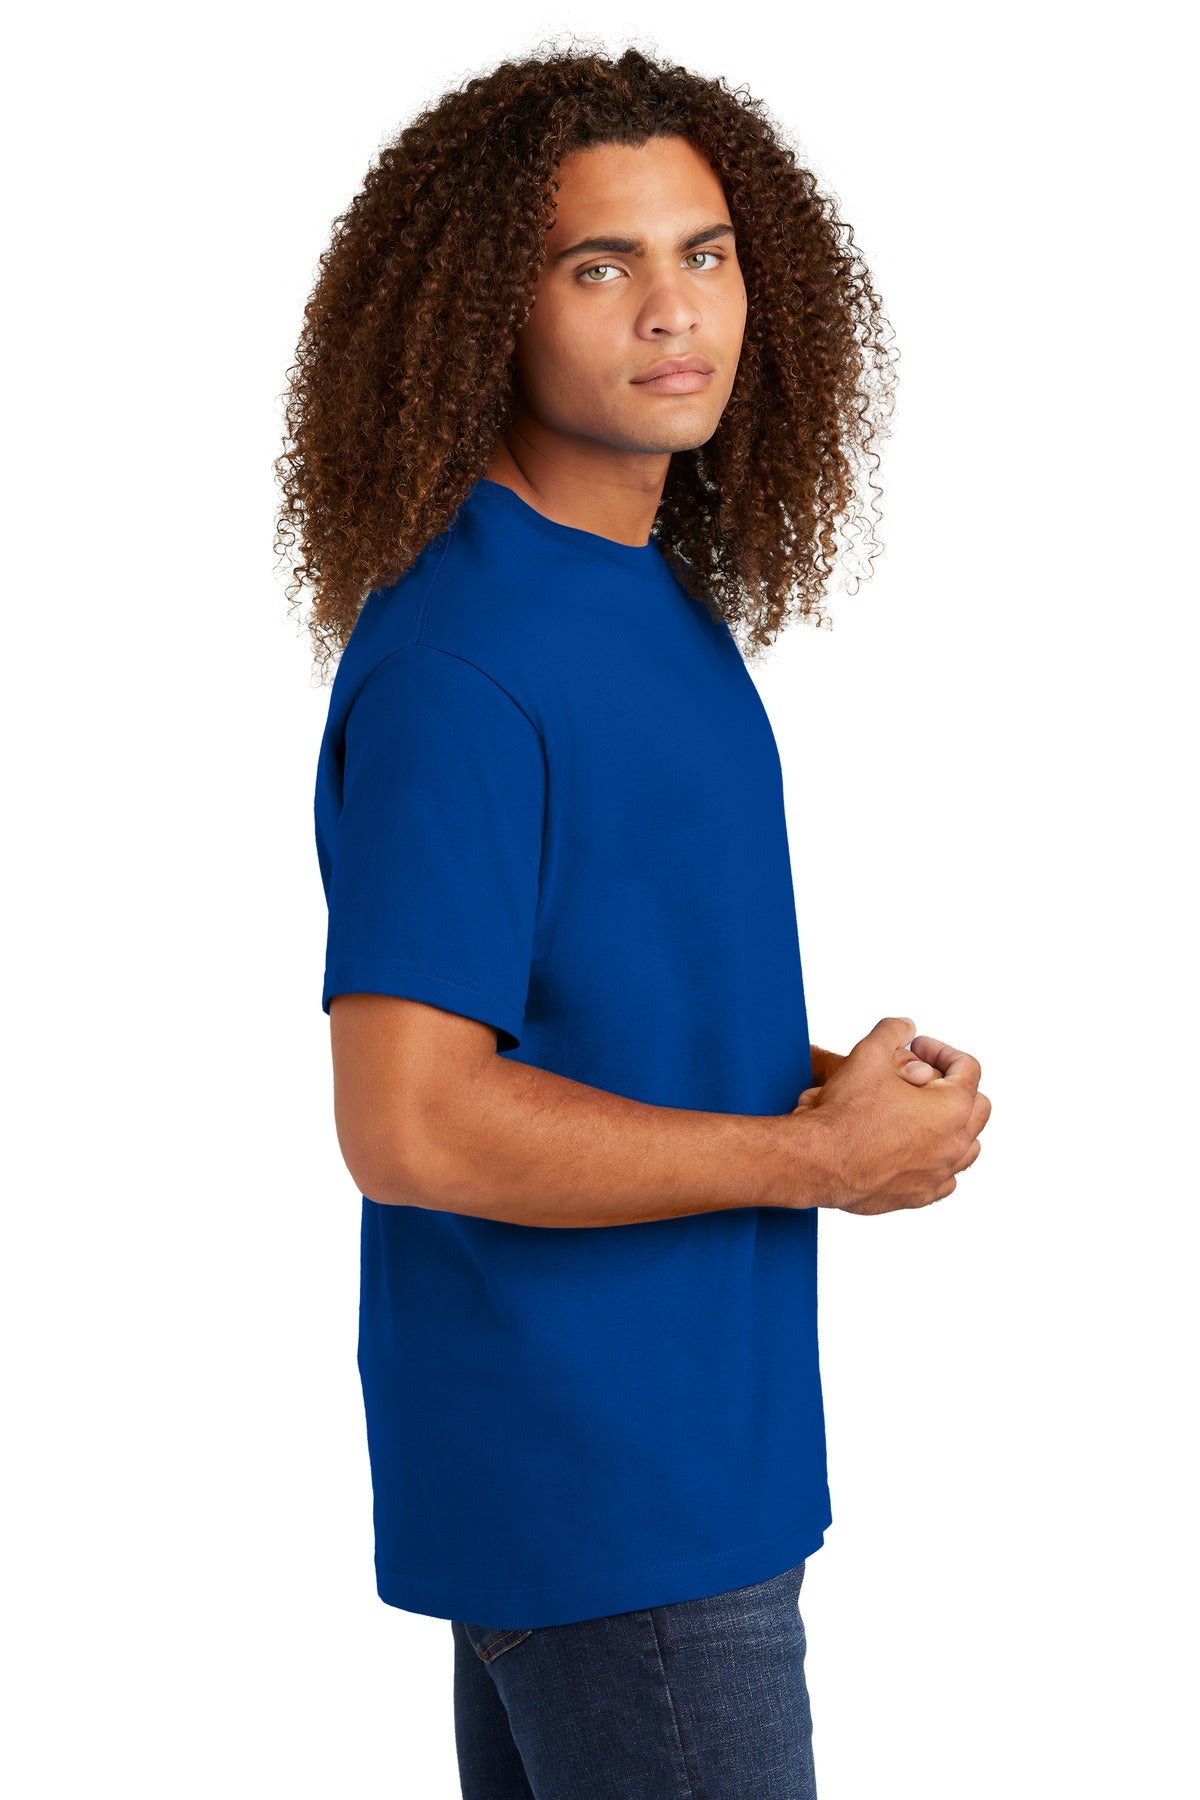 American Apparel® Relaxed T-Shirt 1301W [Royal Blue] - DFW Impression